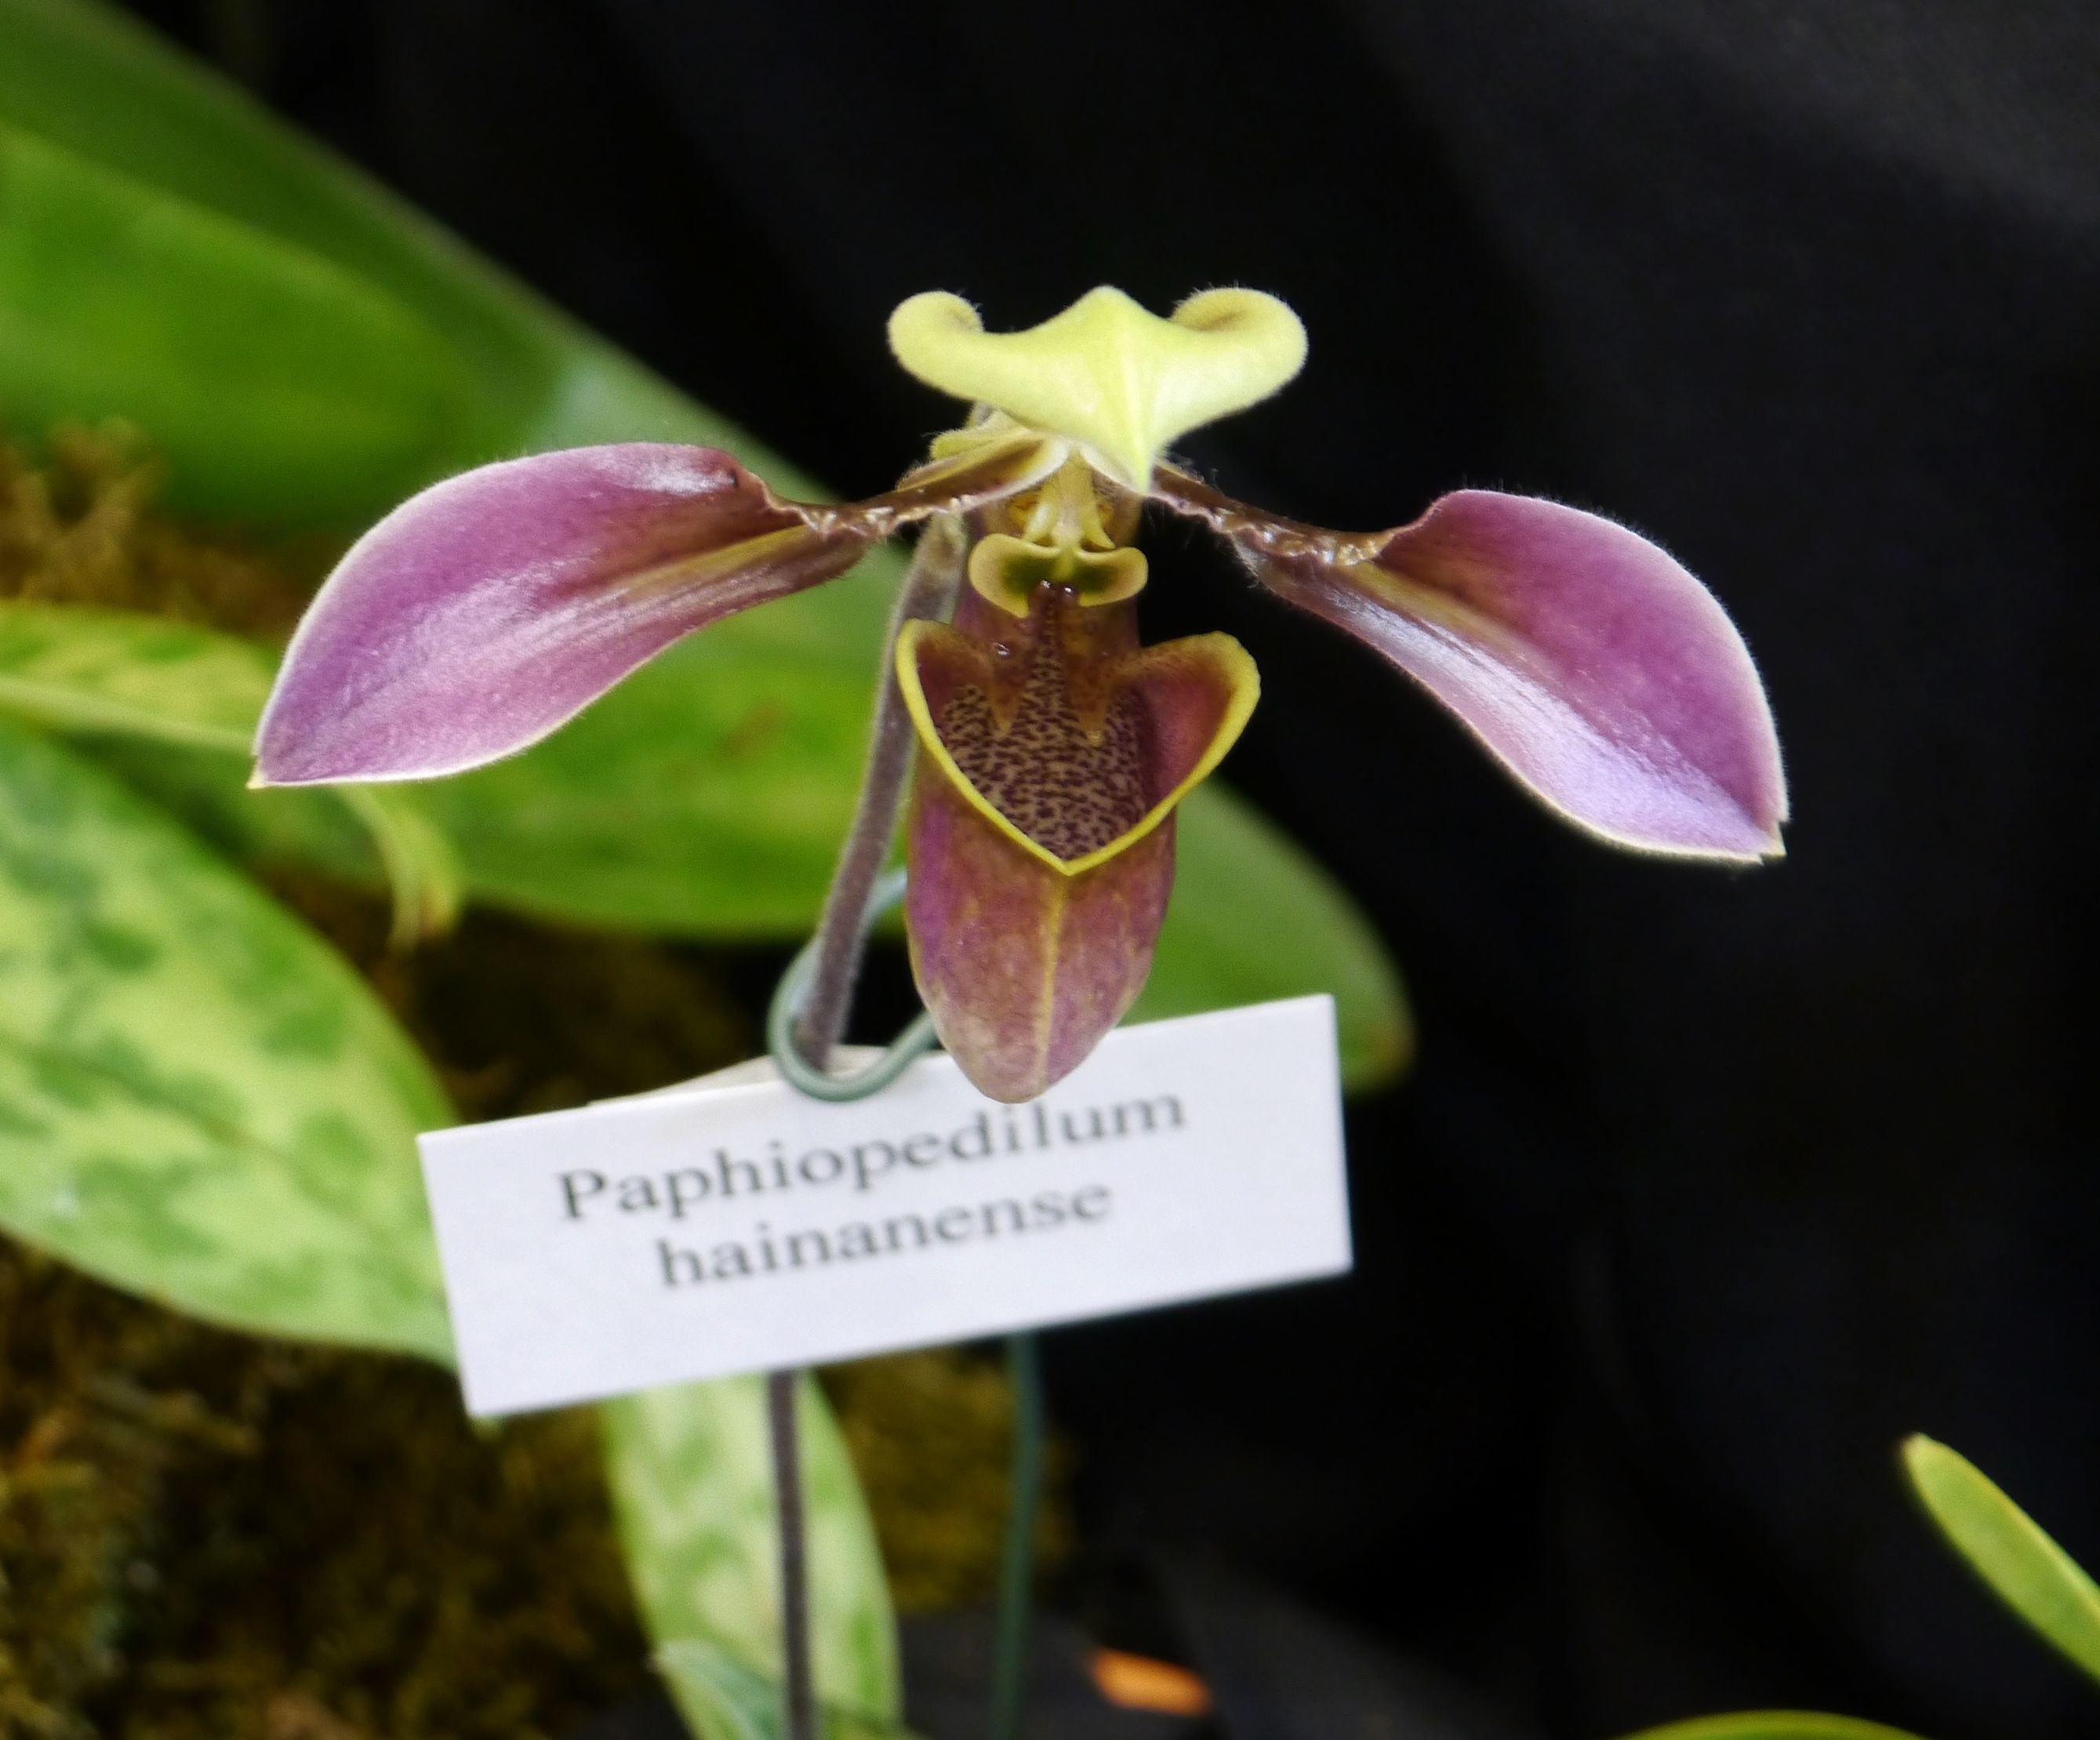 Paphiopedilum hainanense, a species in the appletonium group, that ...